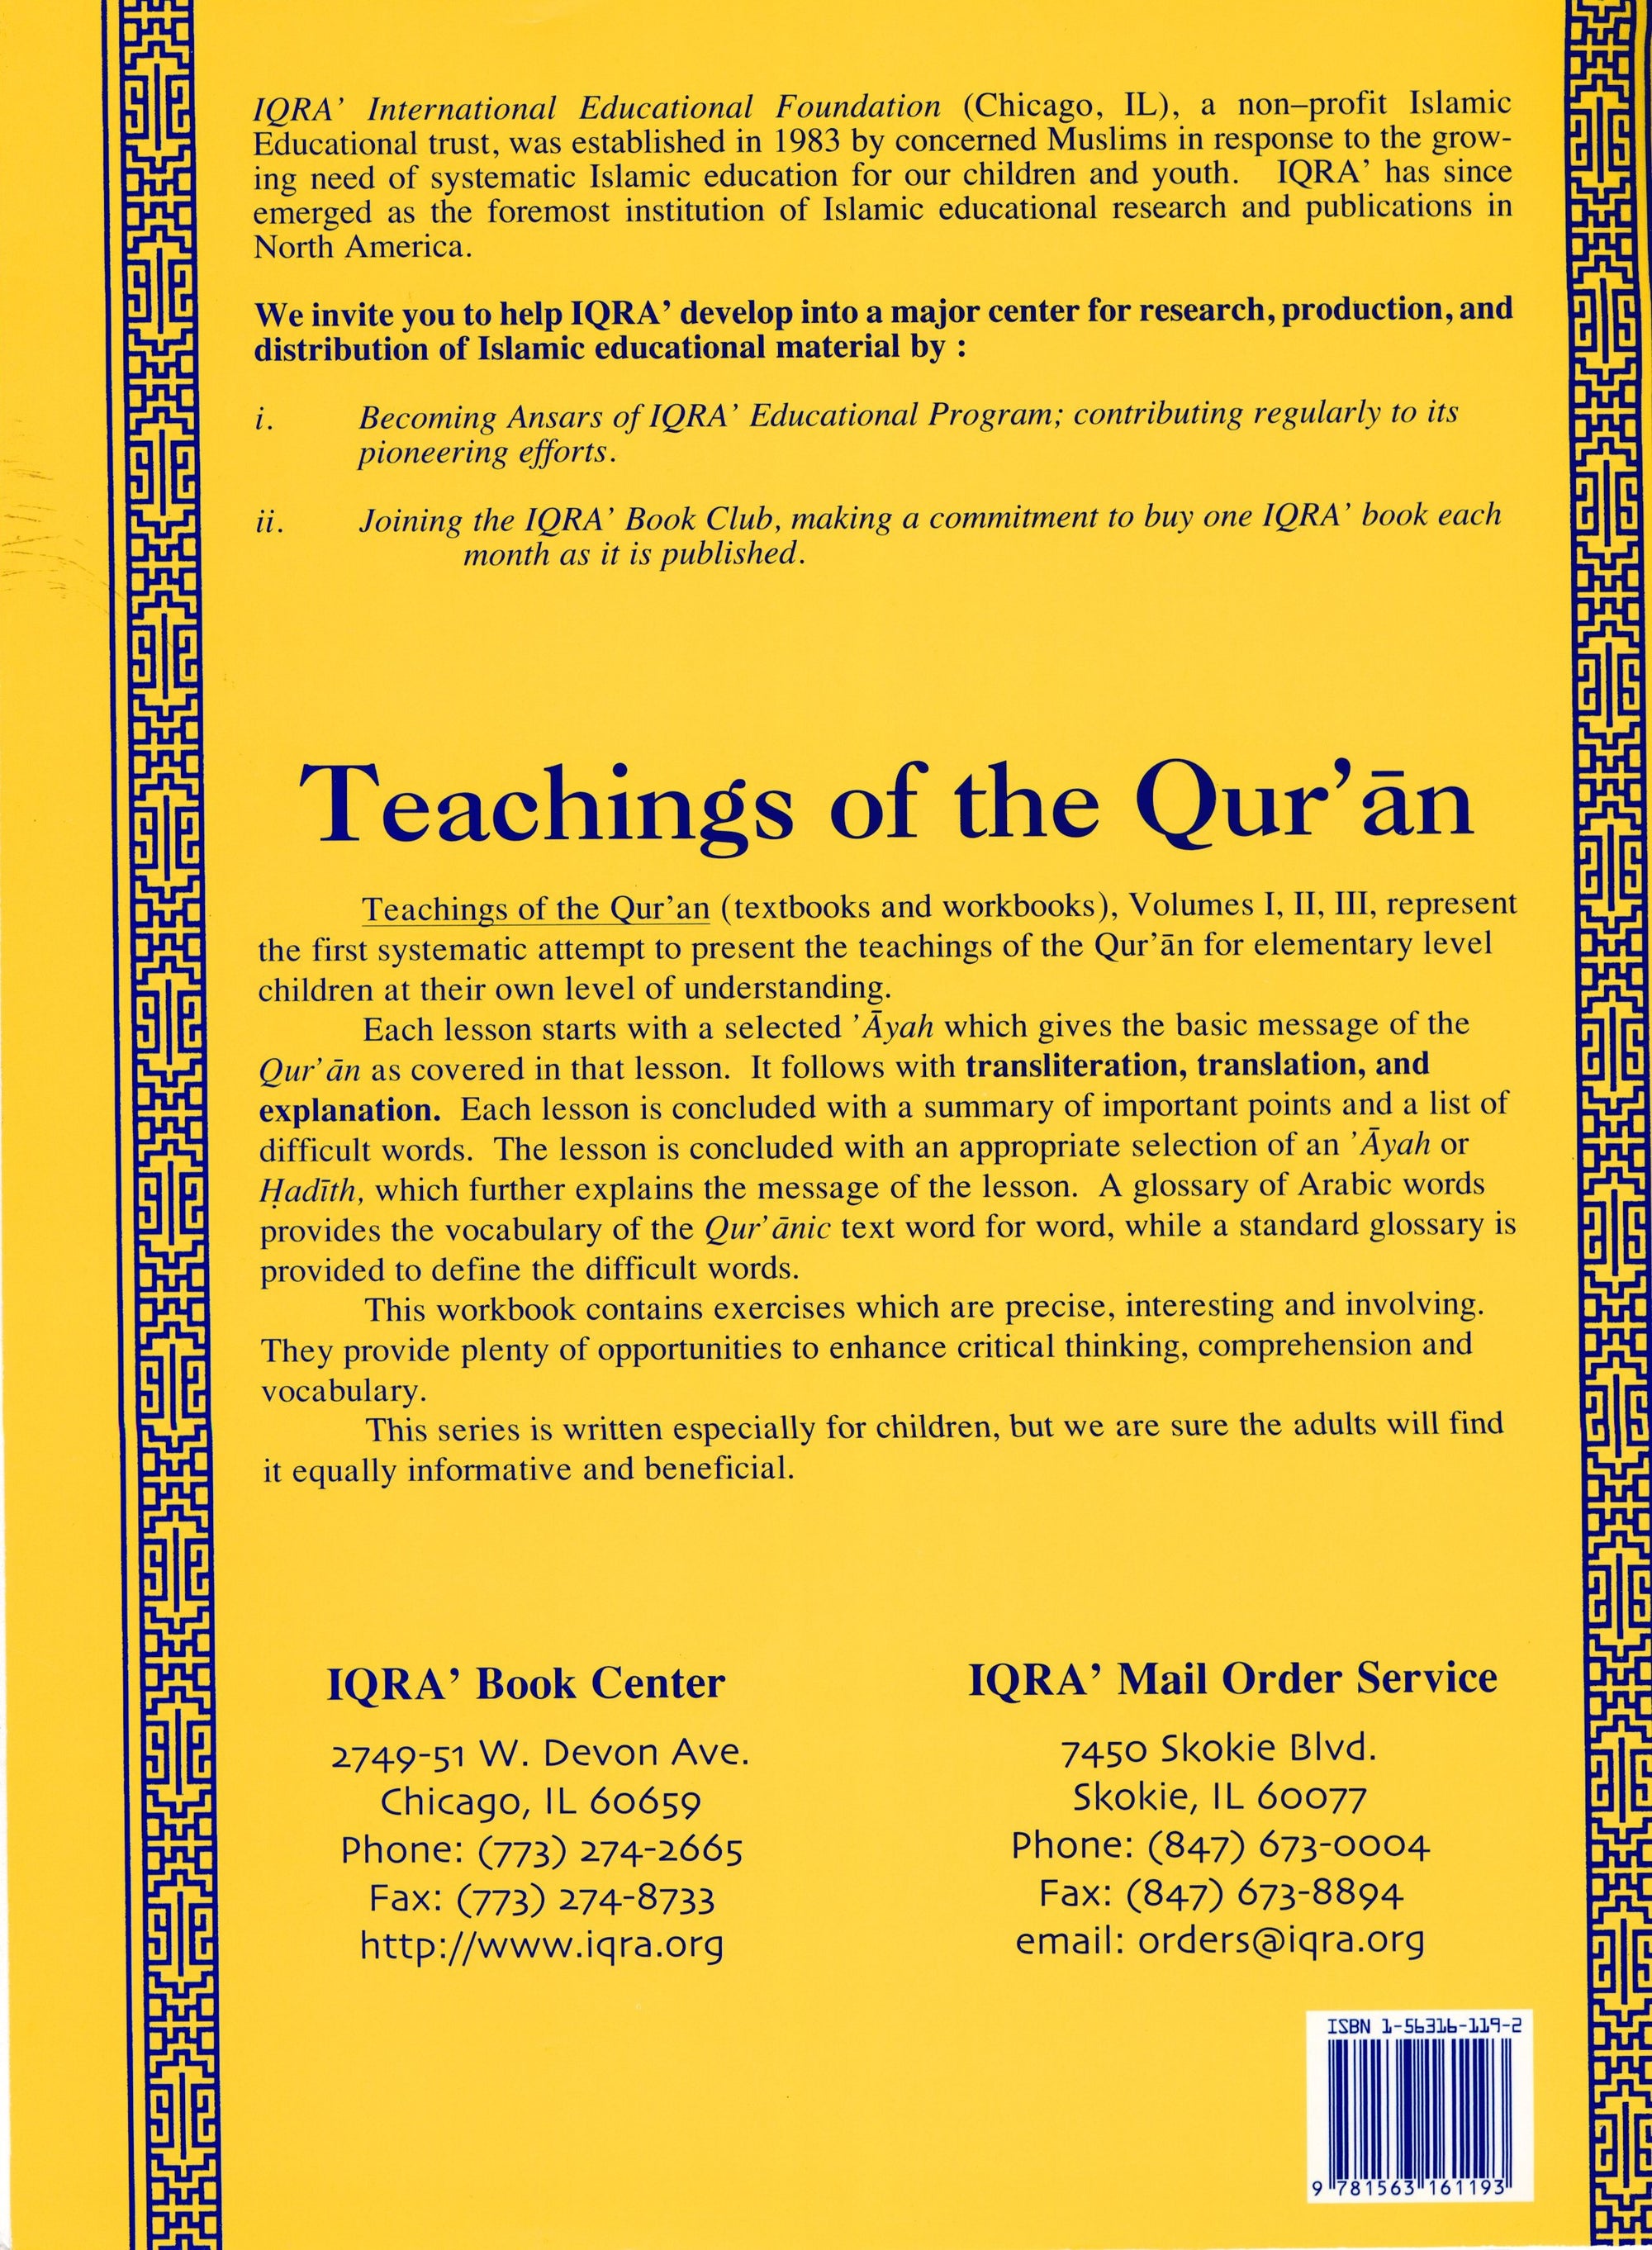 Teachings of the Qur'an Workbook Volume 2